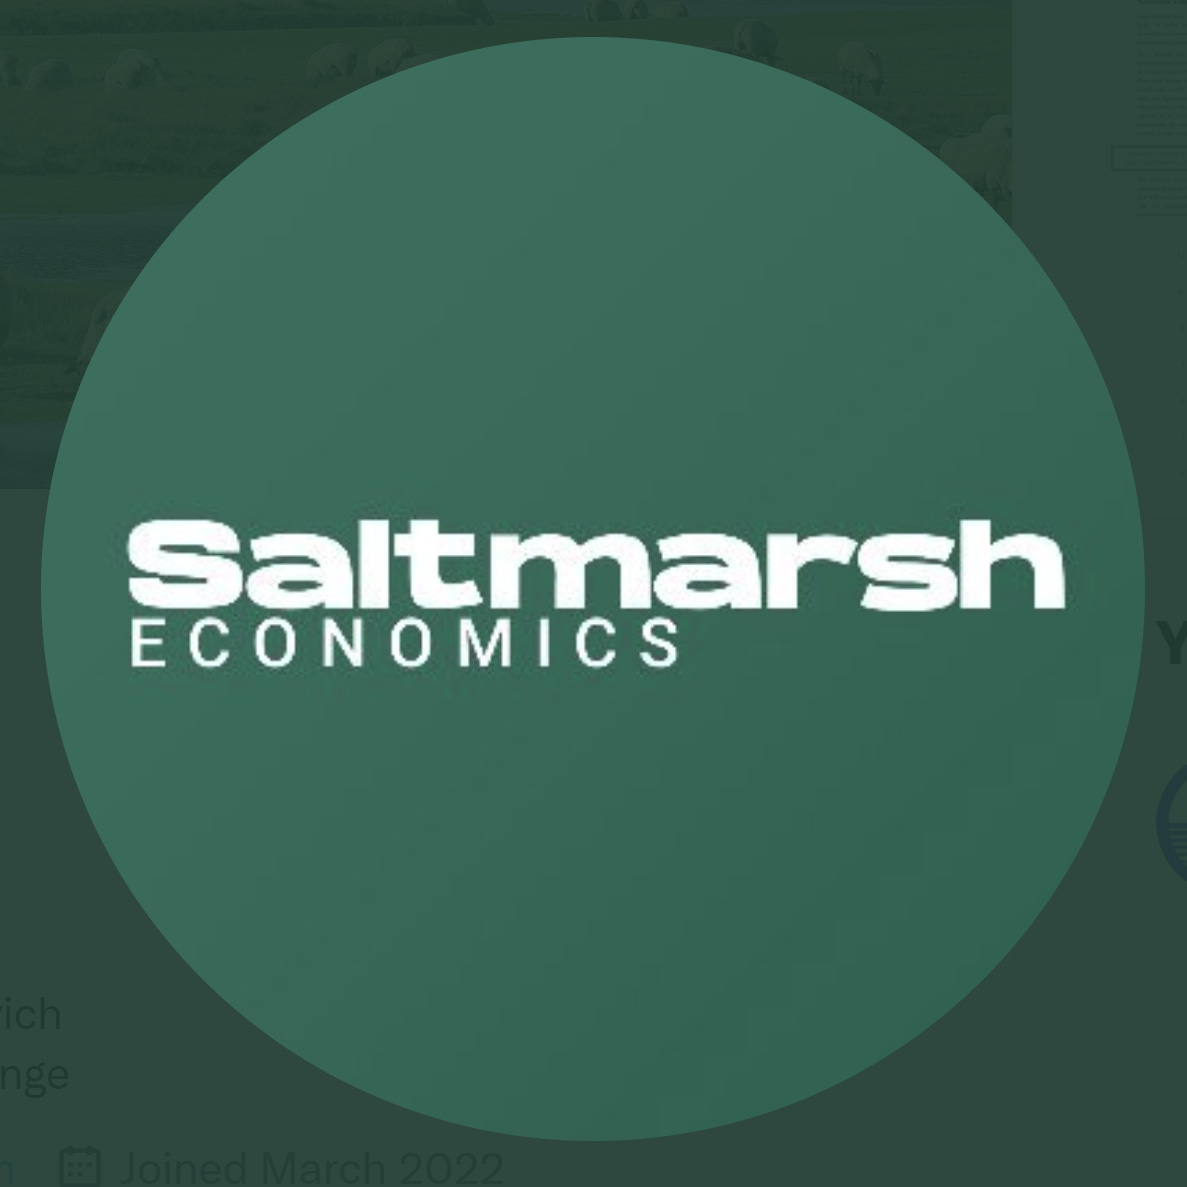 Saltmarsh Economics